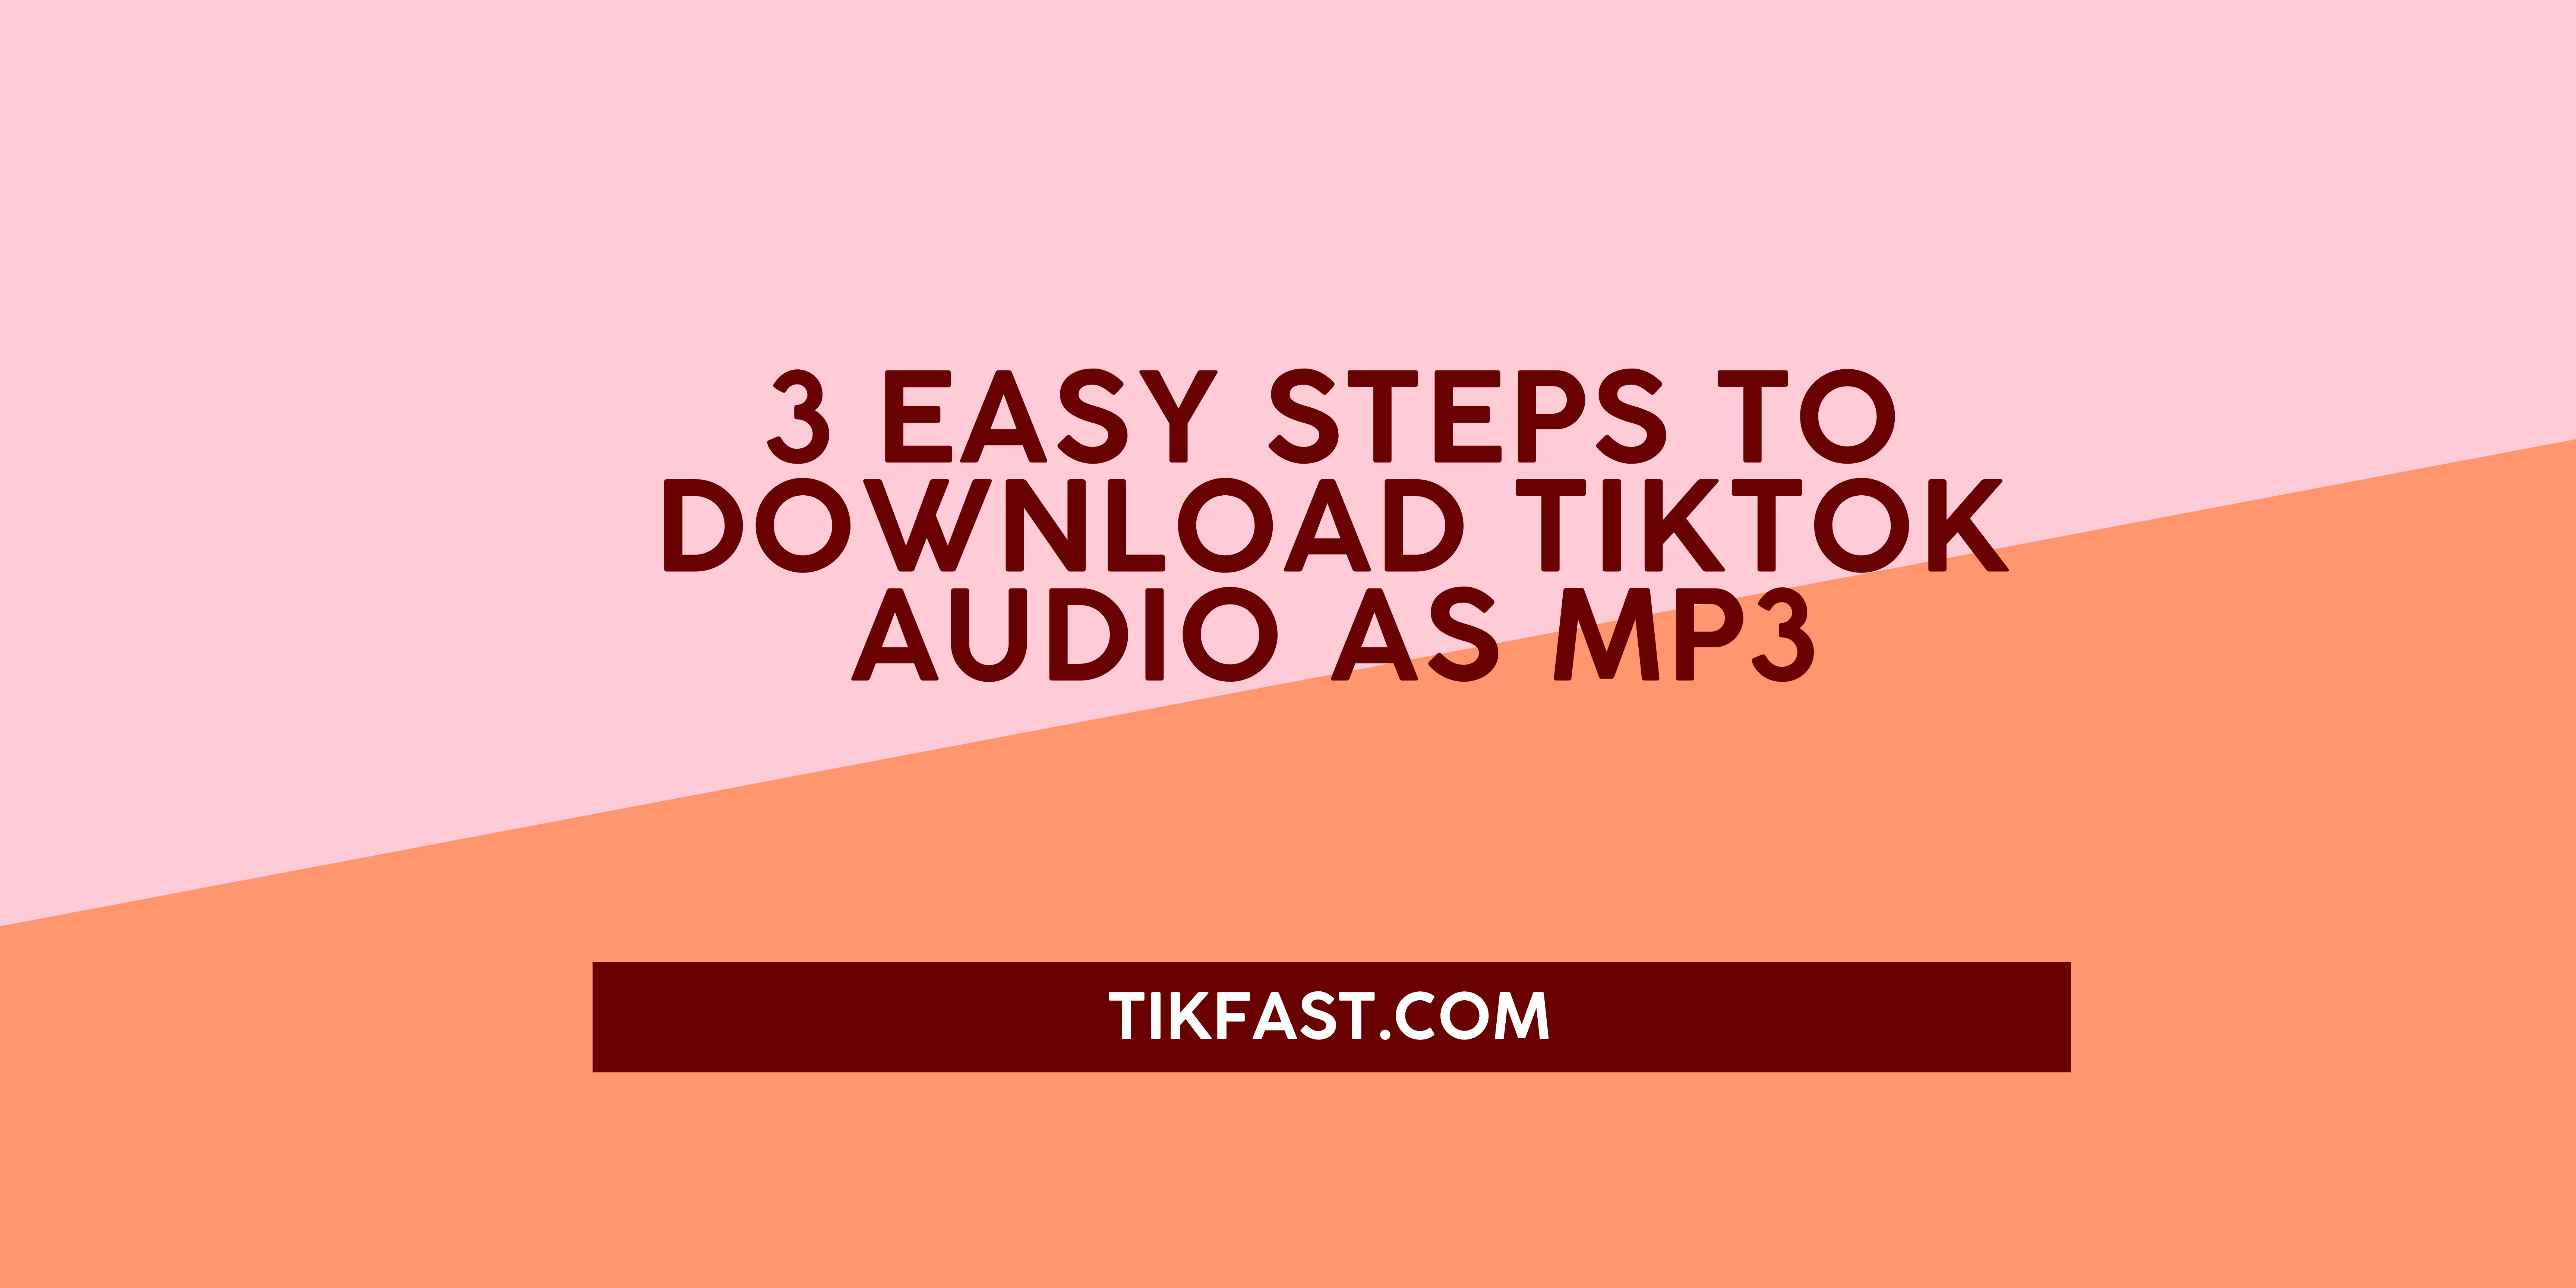 Download TikTok Audio as MP3 